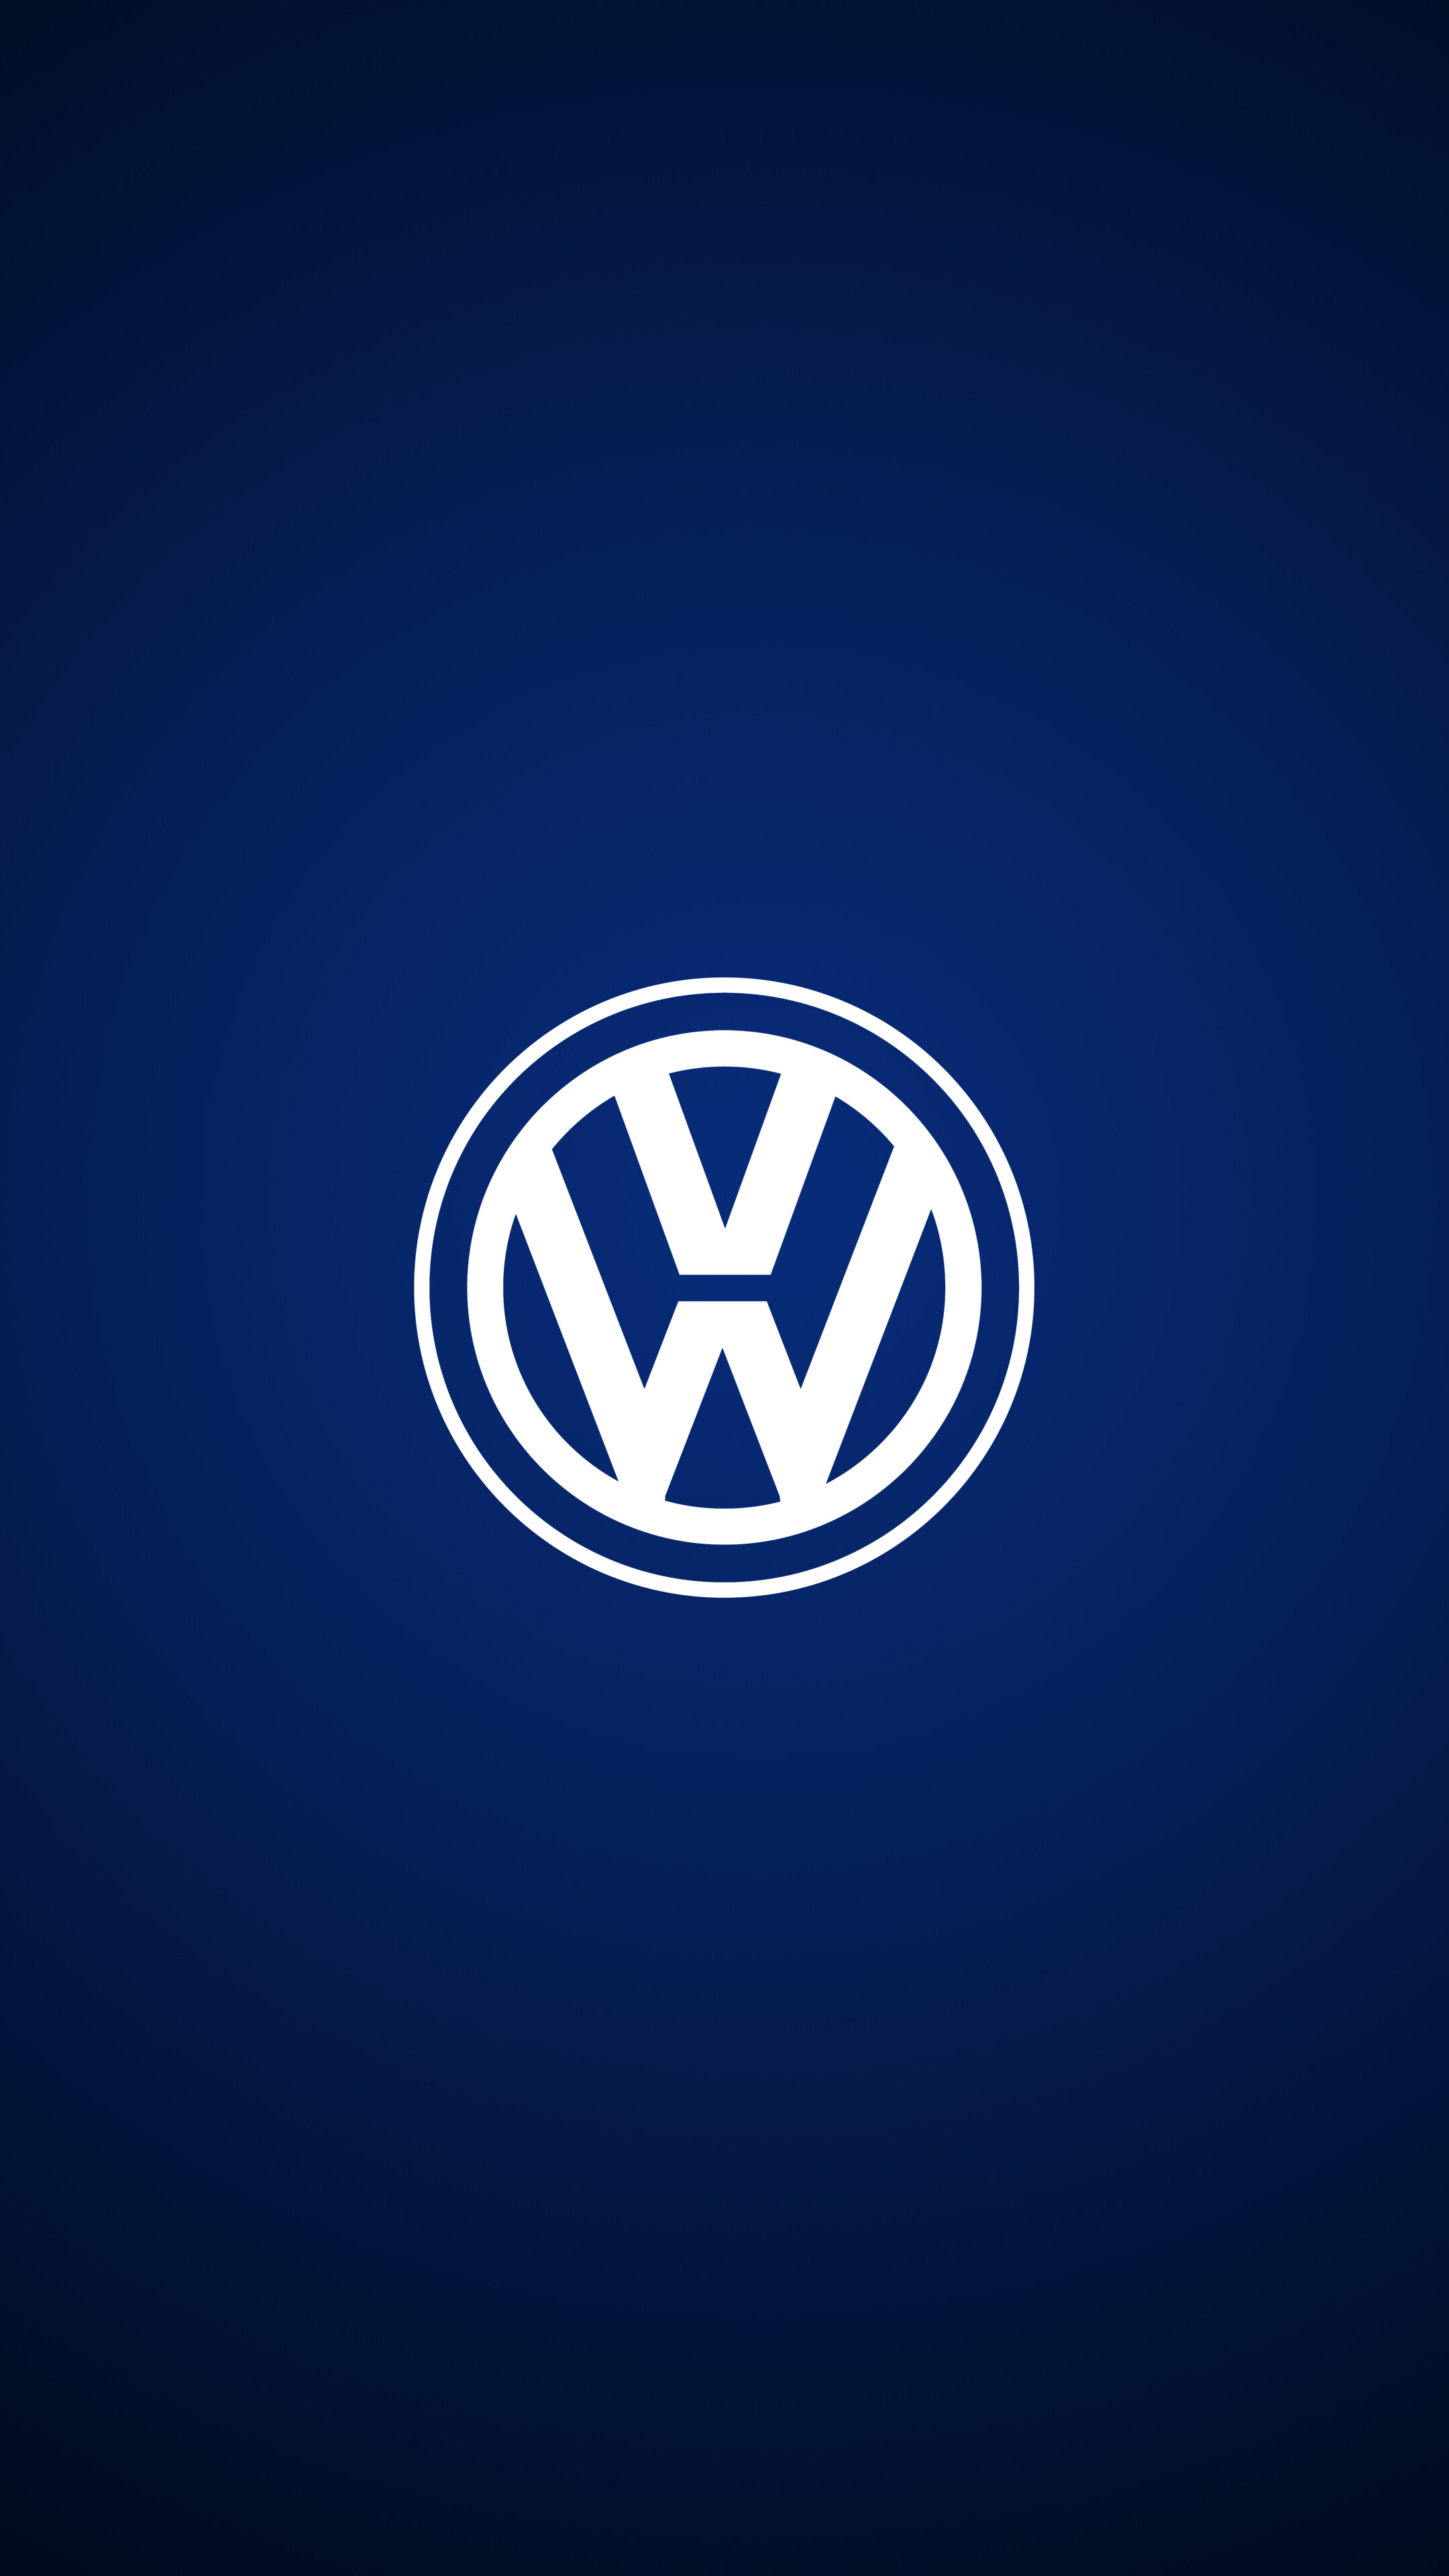 Volkswagen: A German automotive manufacturer, Logo. 2160x3840 4K Wallpaper.